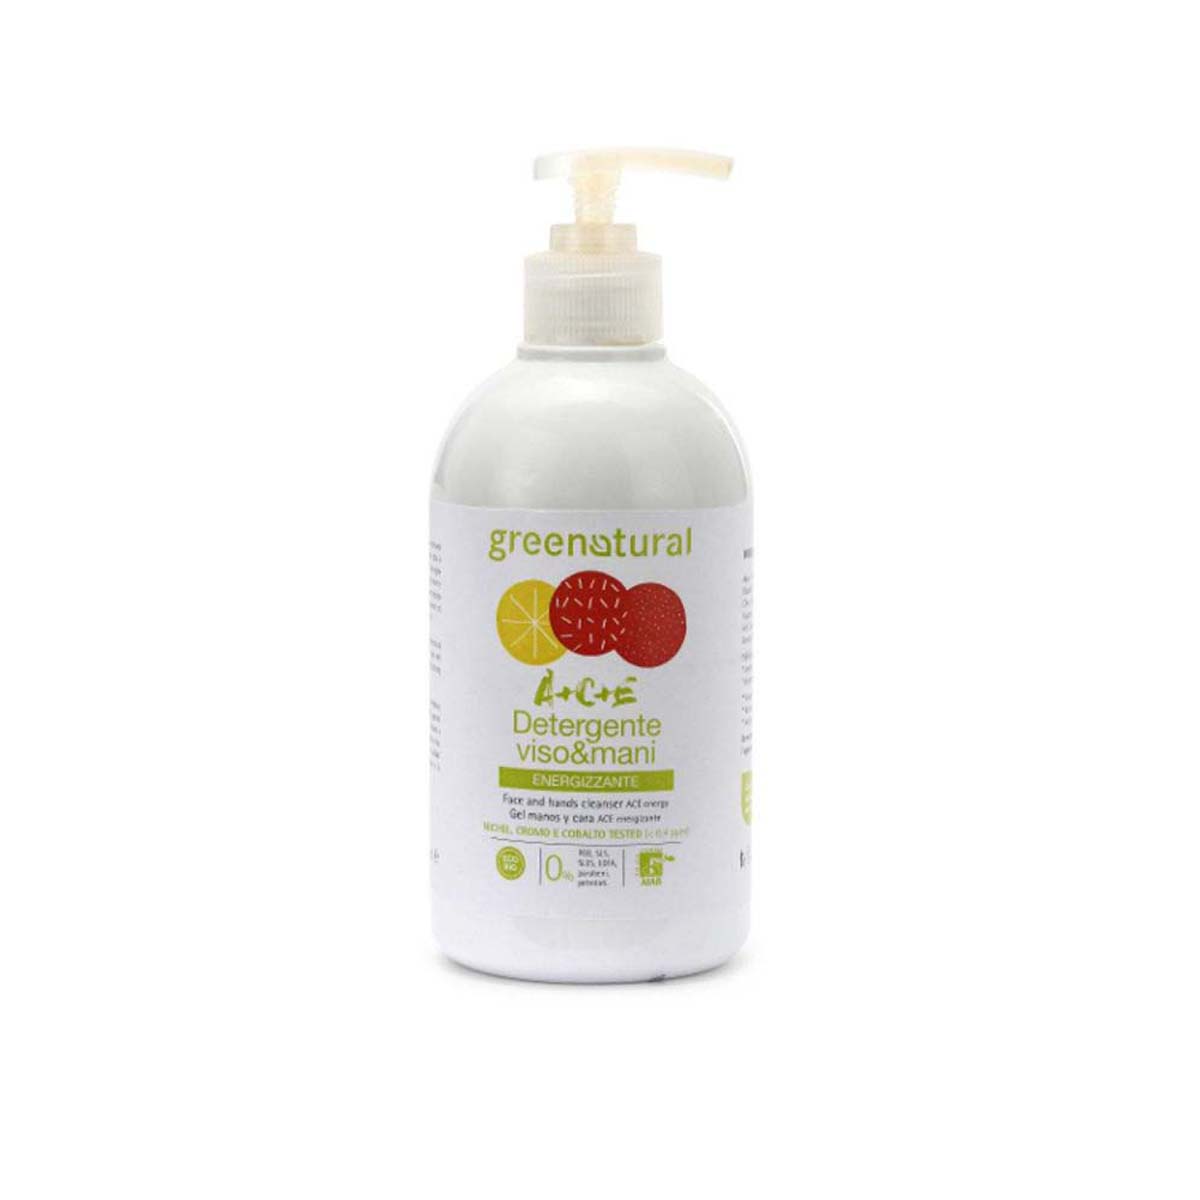 Greenatural Detergente Viso & Mani ACE 500ml